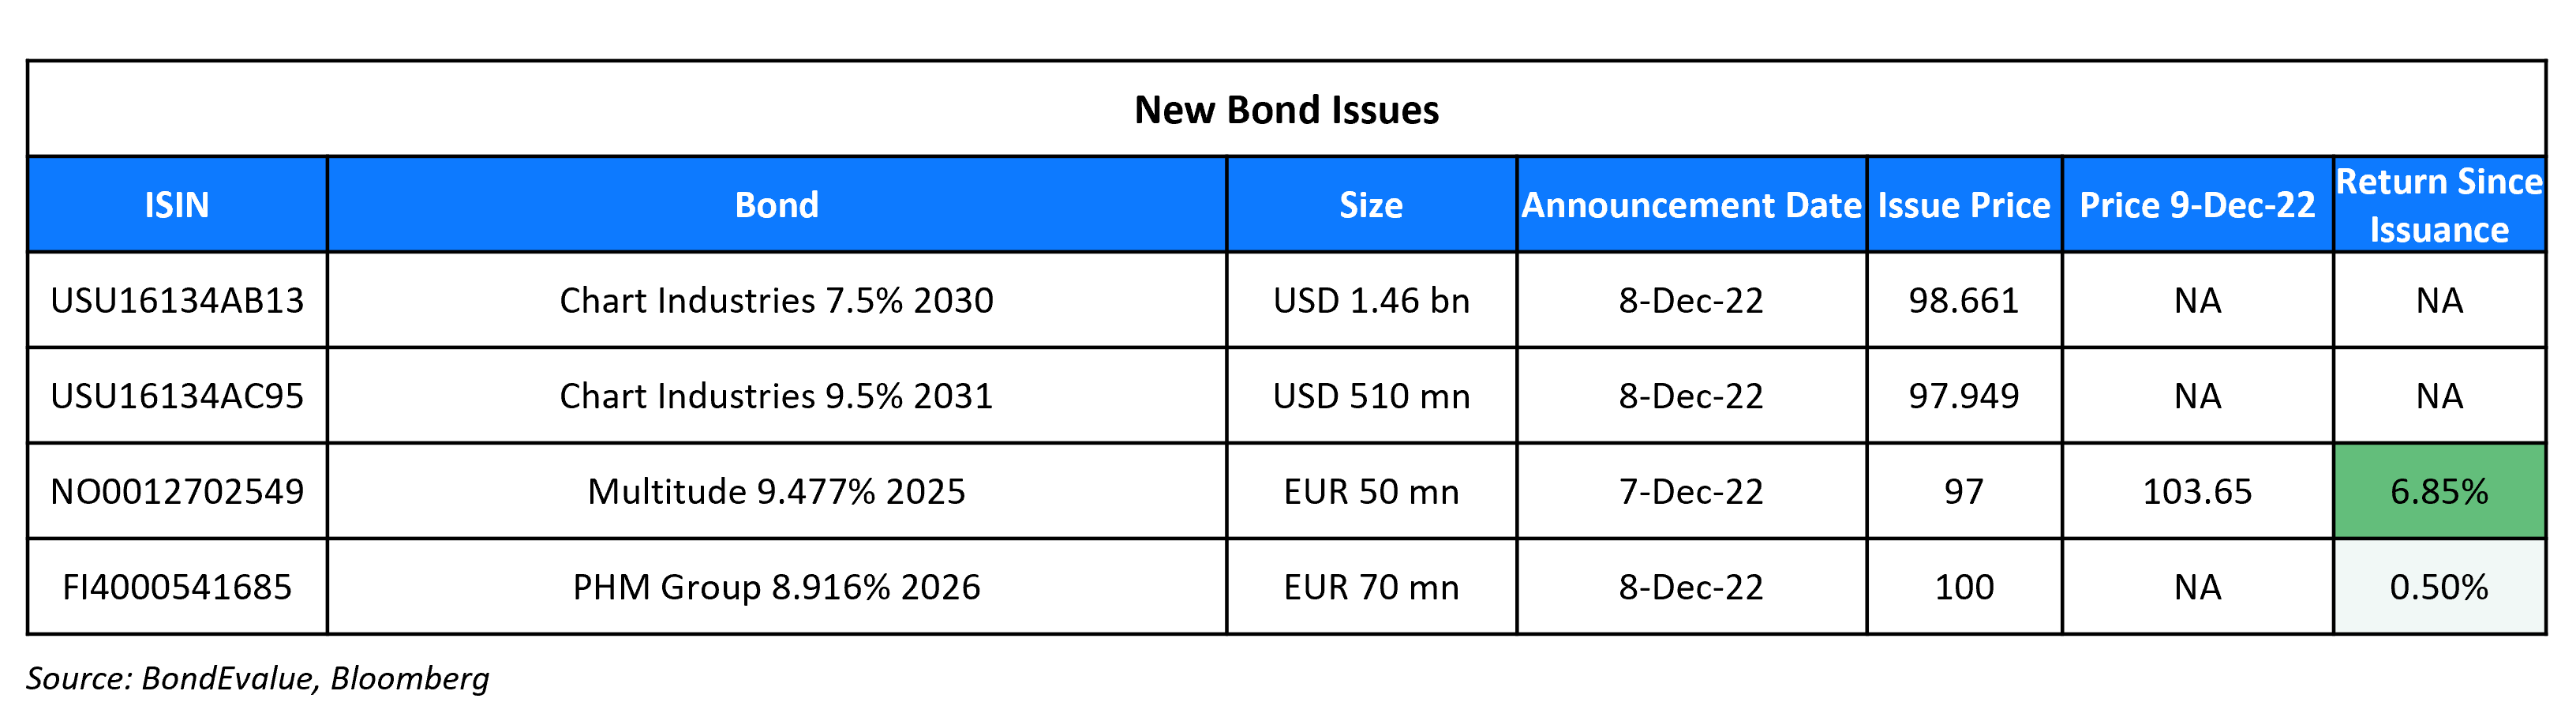 New Bond Issues 9 Dec 22